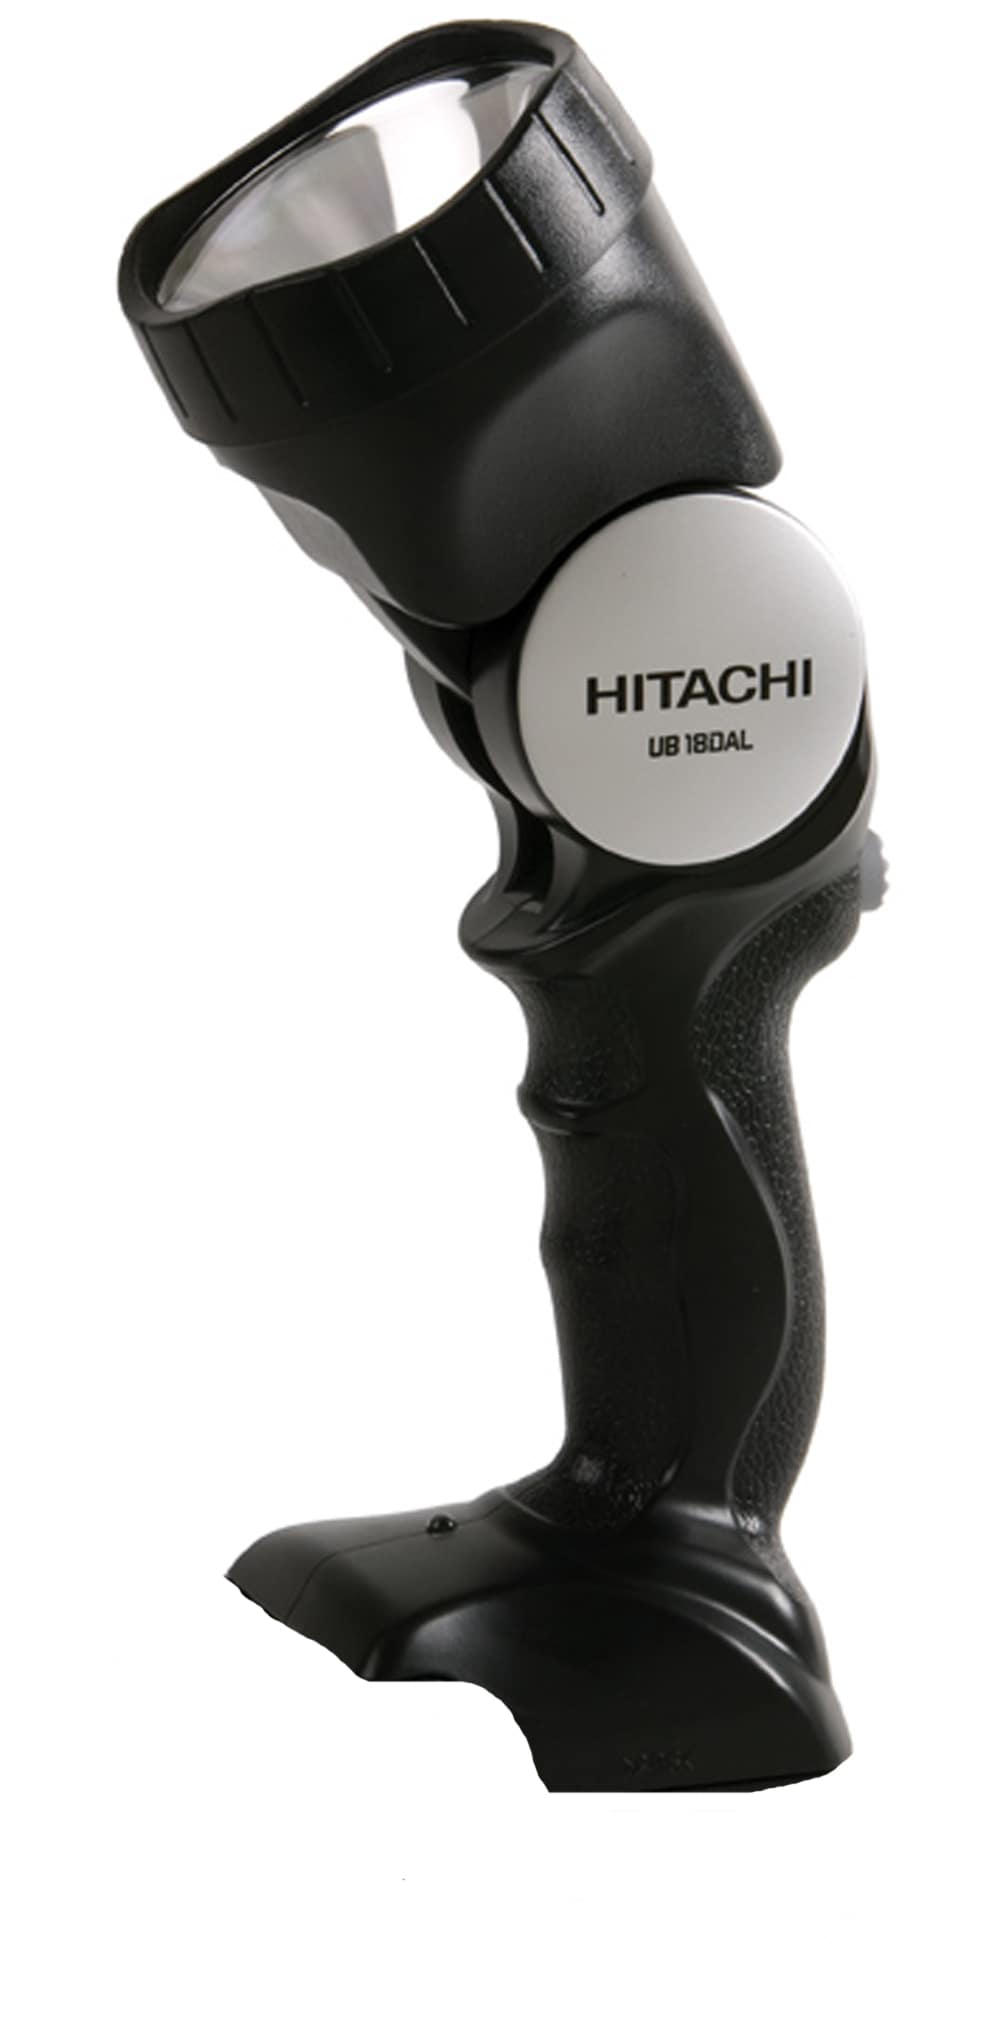 4 X For HITACHI 18v Volt Flashlight Replacement Xenon Bulb 318-767 UB18DAL 18DAL 